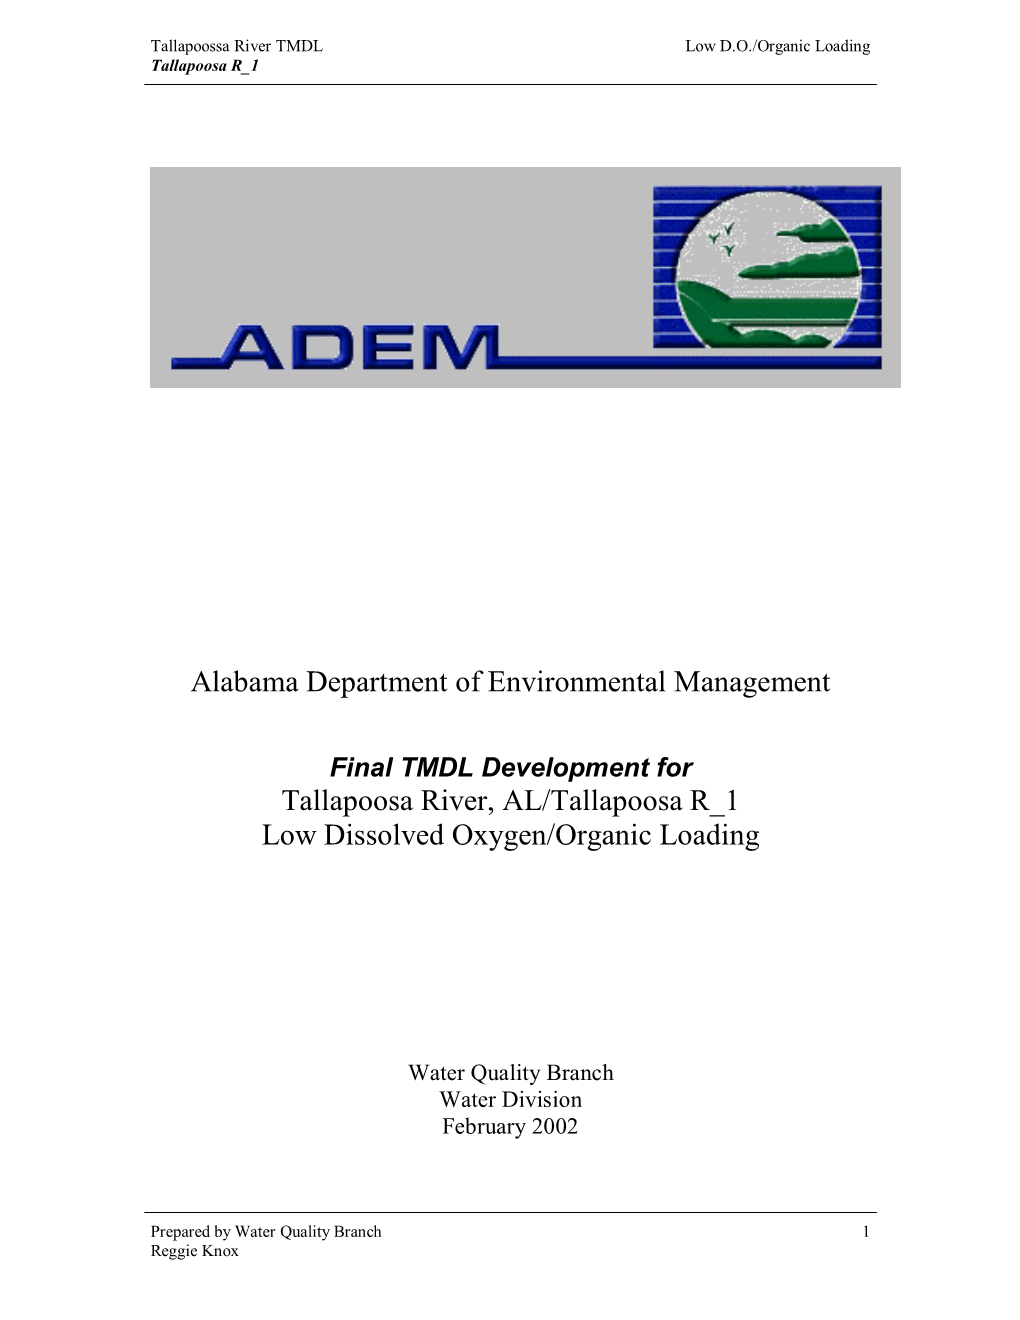 Alabama Department of Environmental Management Tallapoosa River, AL/Tallapoosa R 1 Low Dissolved Oxygen/Organic Loading